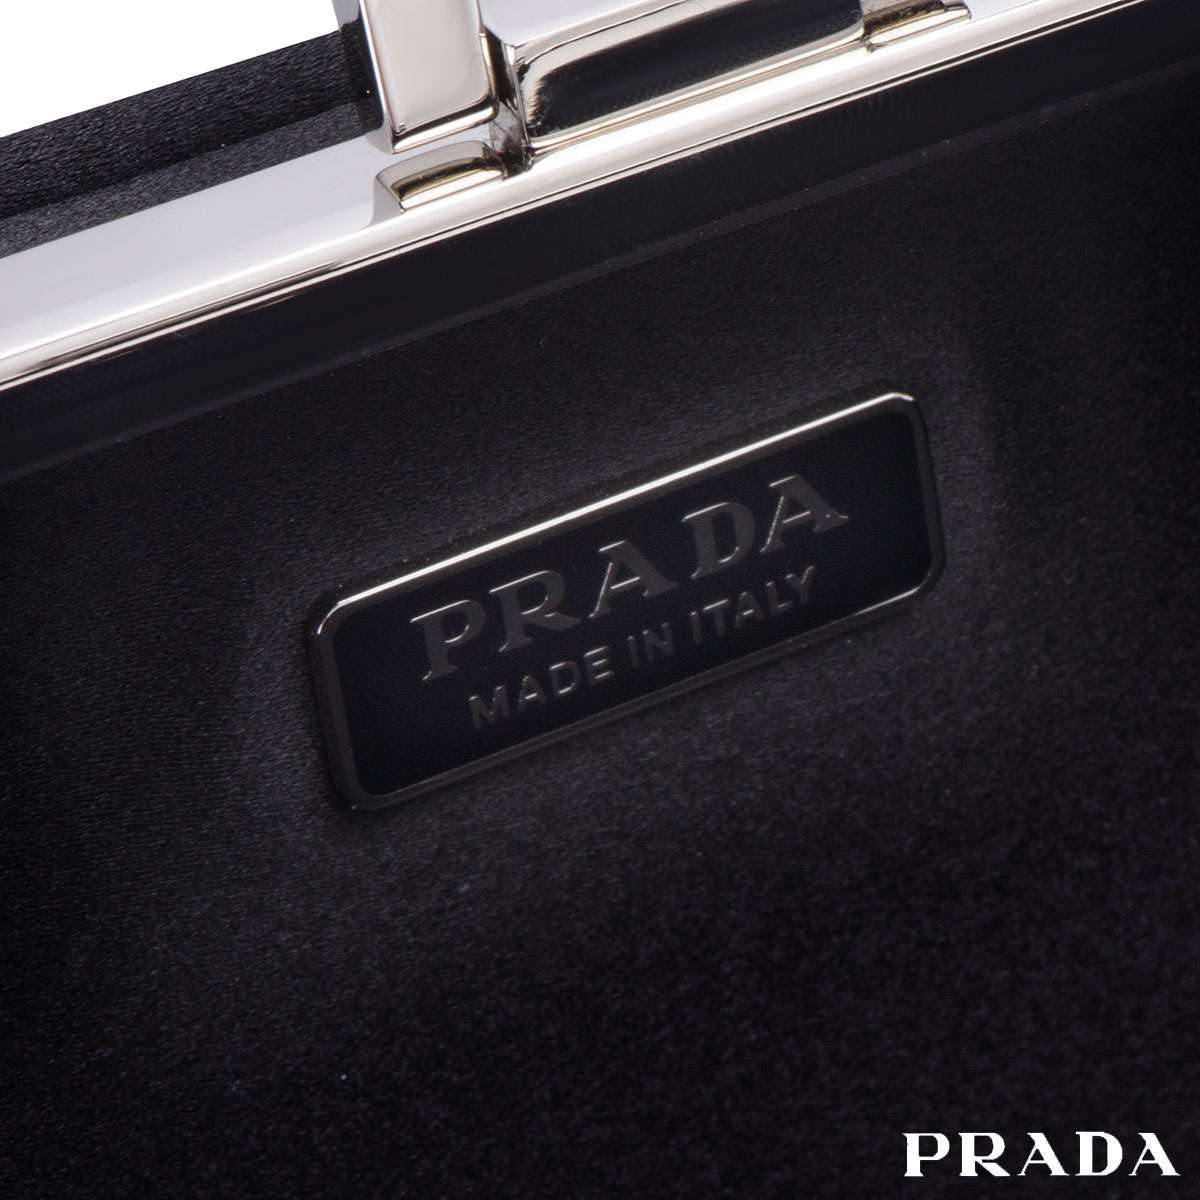 Prada Satin Embellished Box Clutch